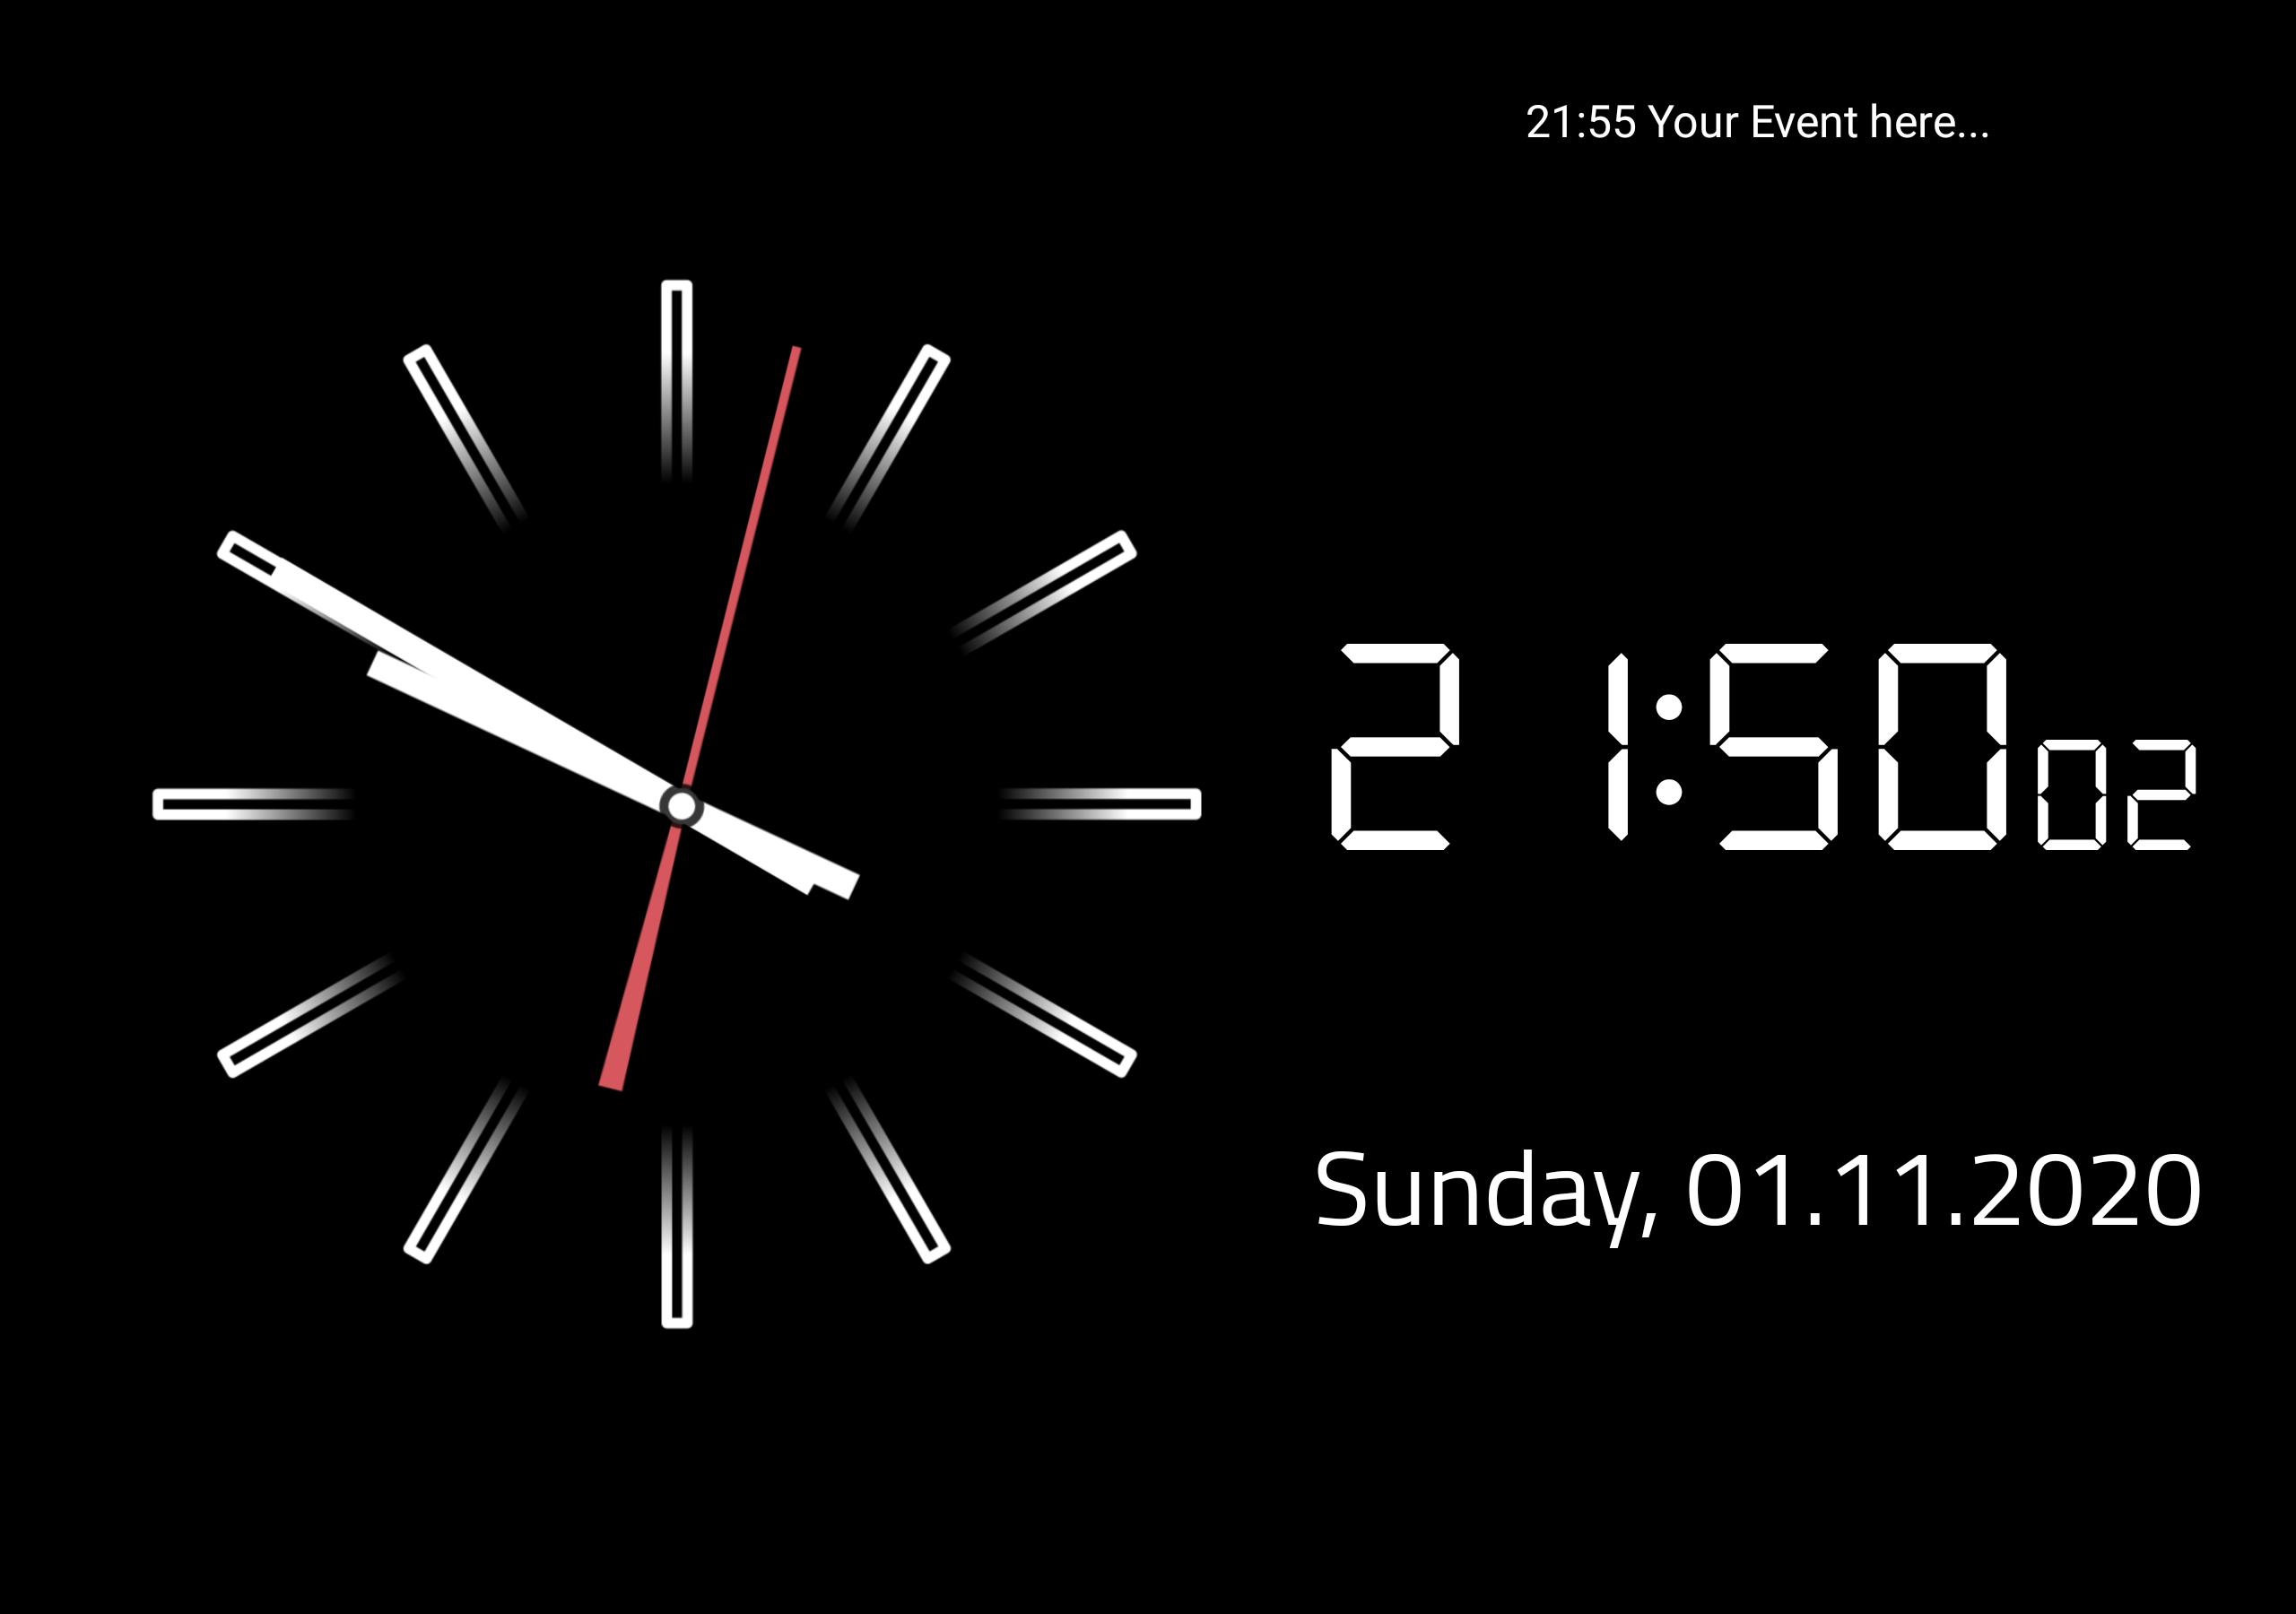 Descarga de APK de Salvapantallas de reloj para Android